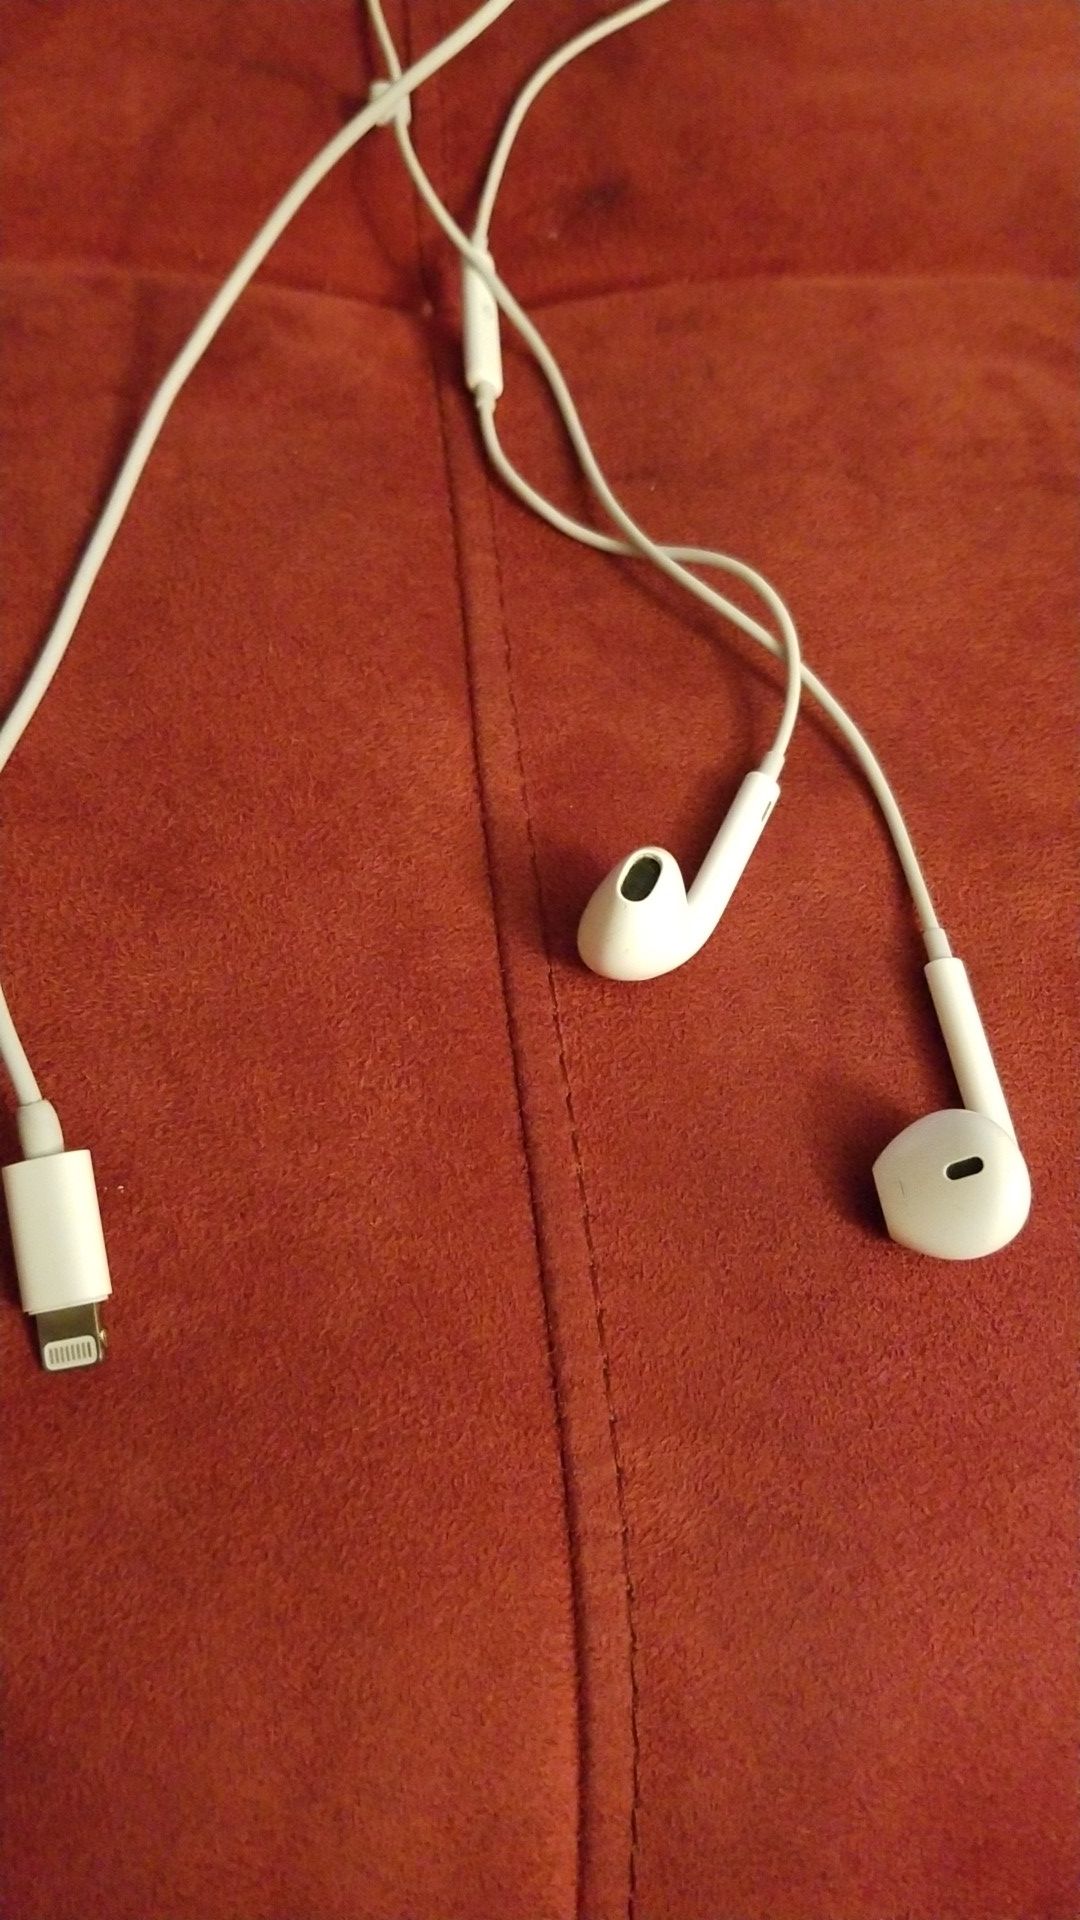 Apple iPhone Headphones